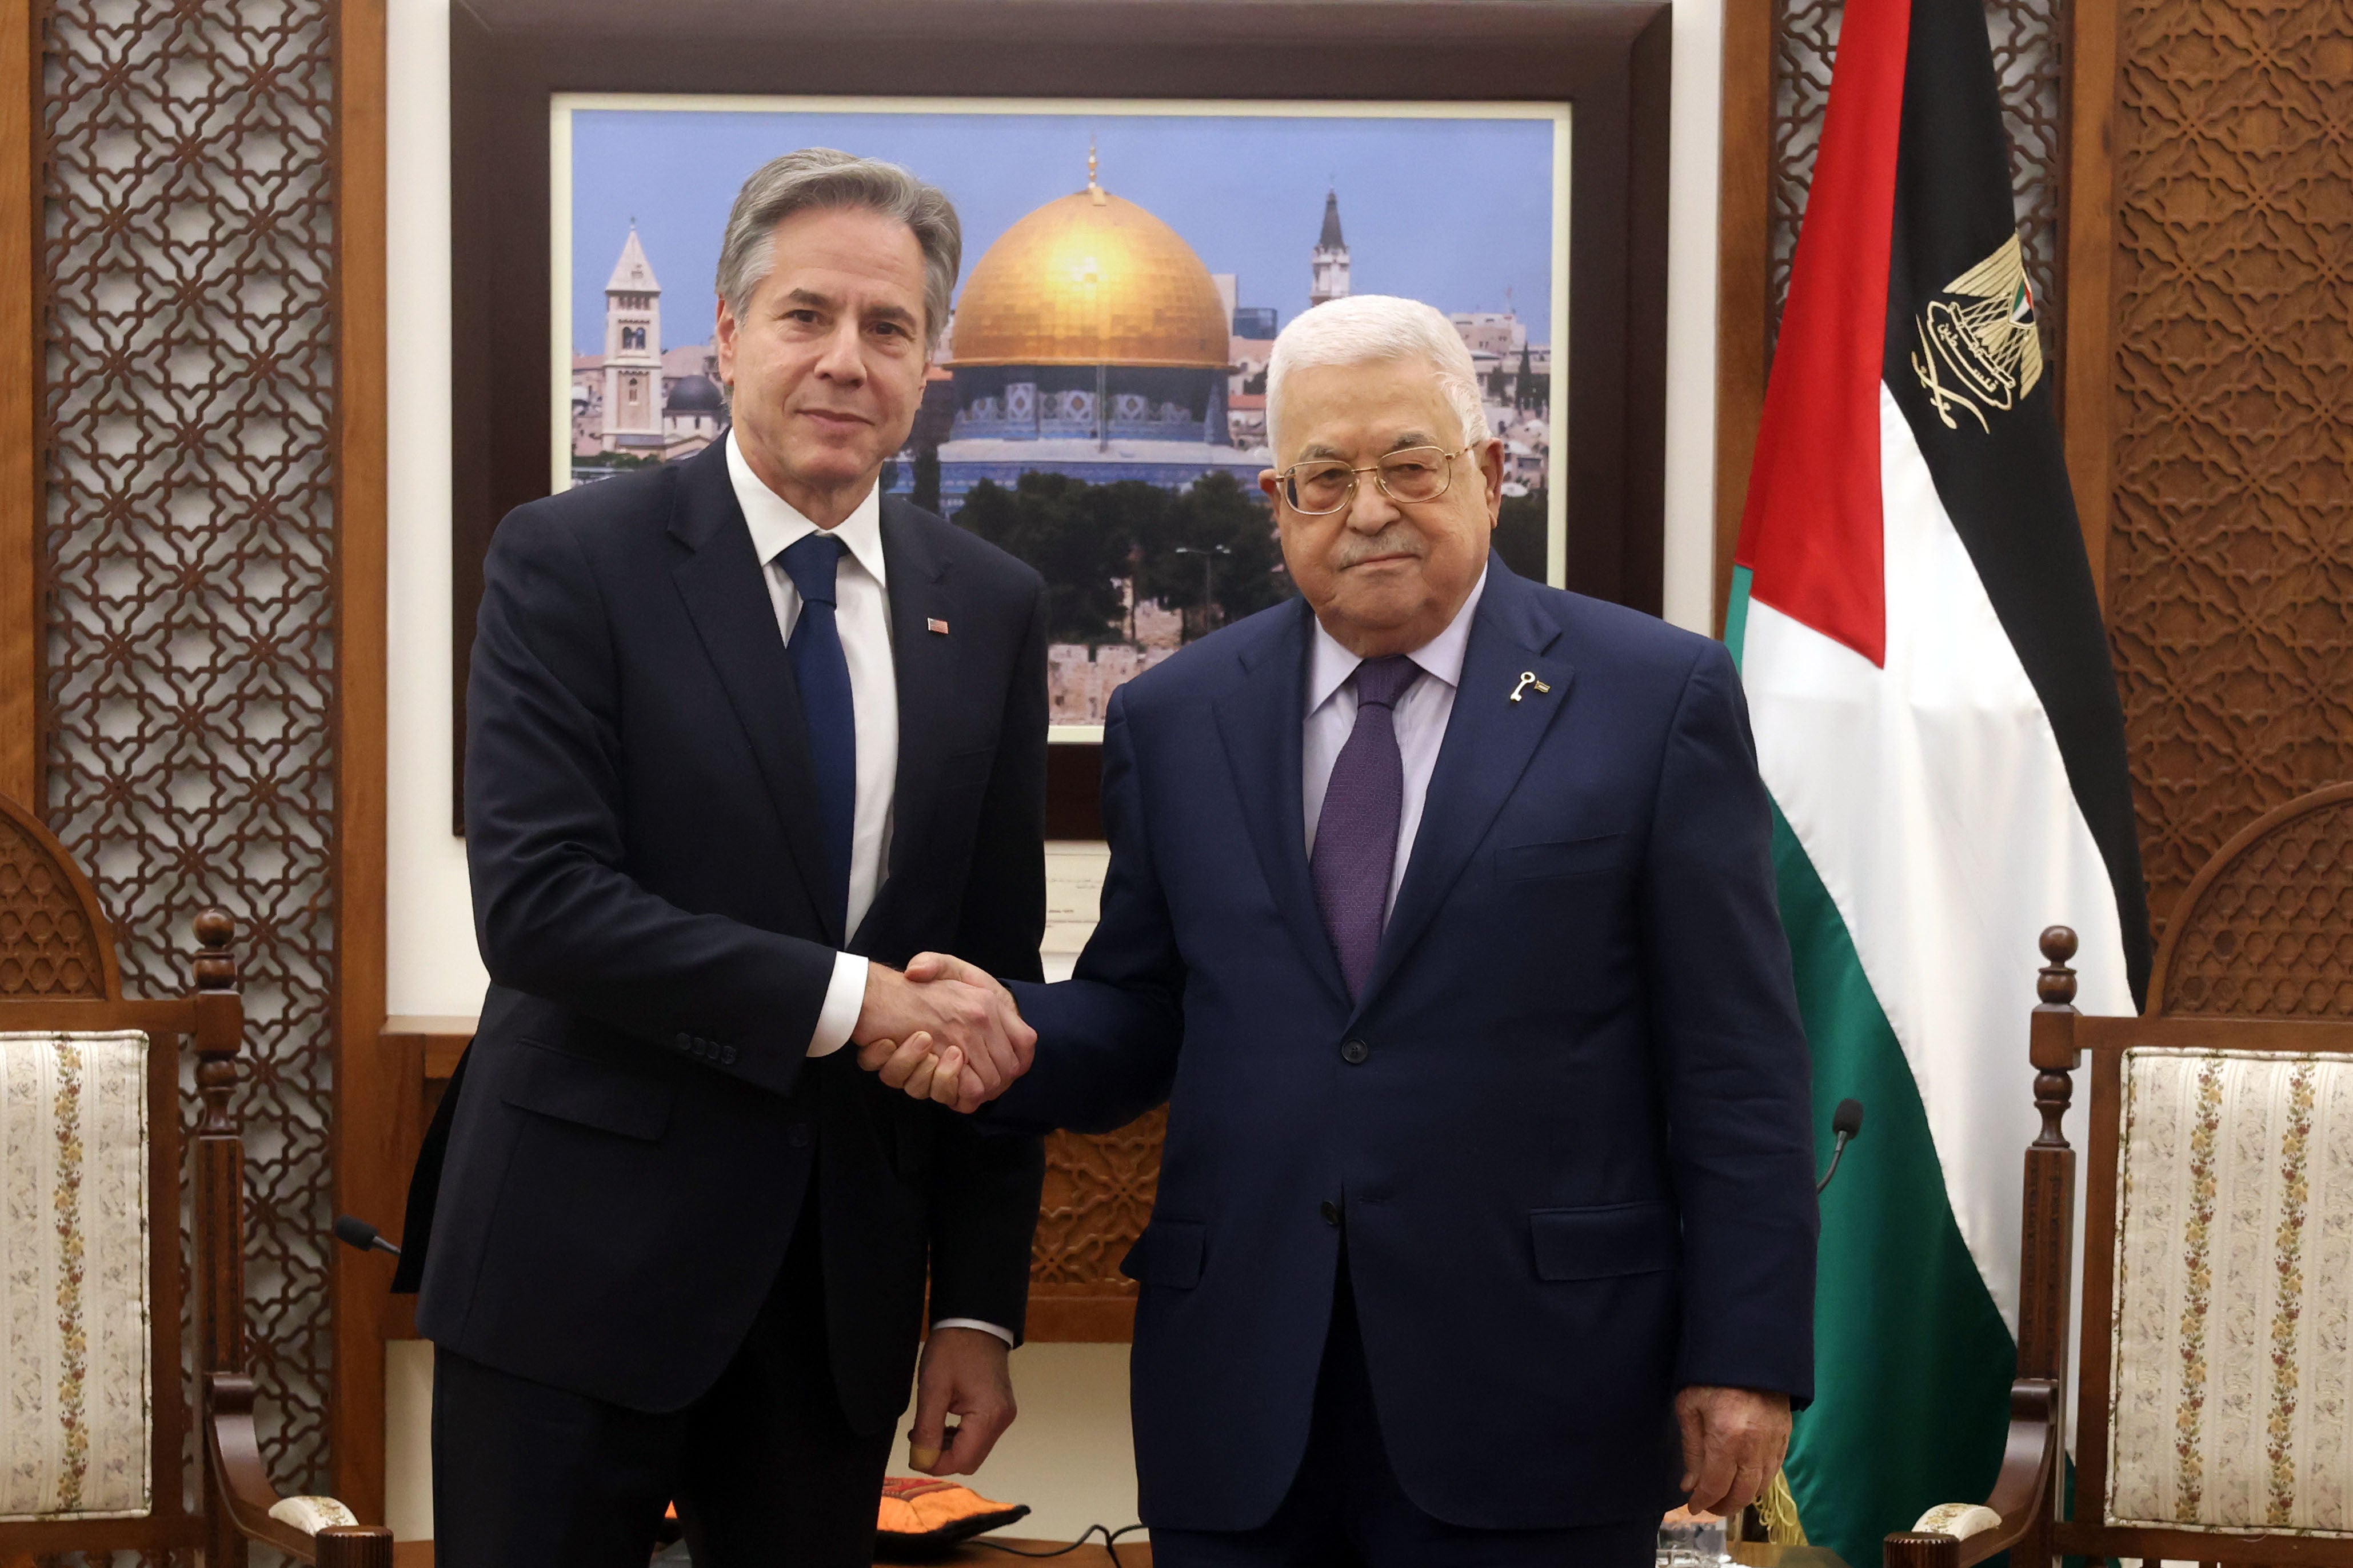 US diplomat Antony Blinken meets with Palestinian Authority leader Mahmoud Abbas